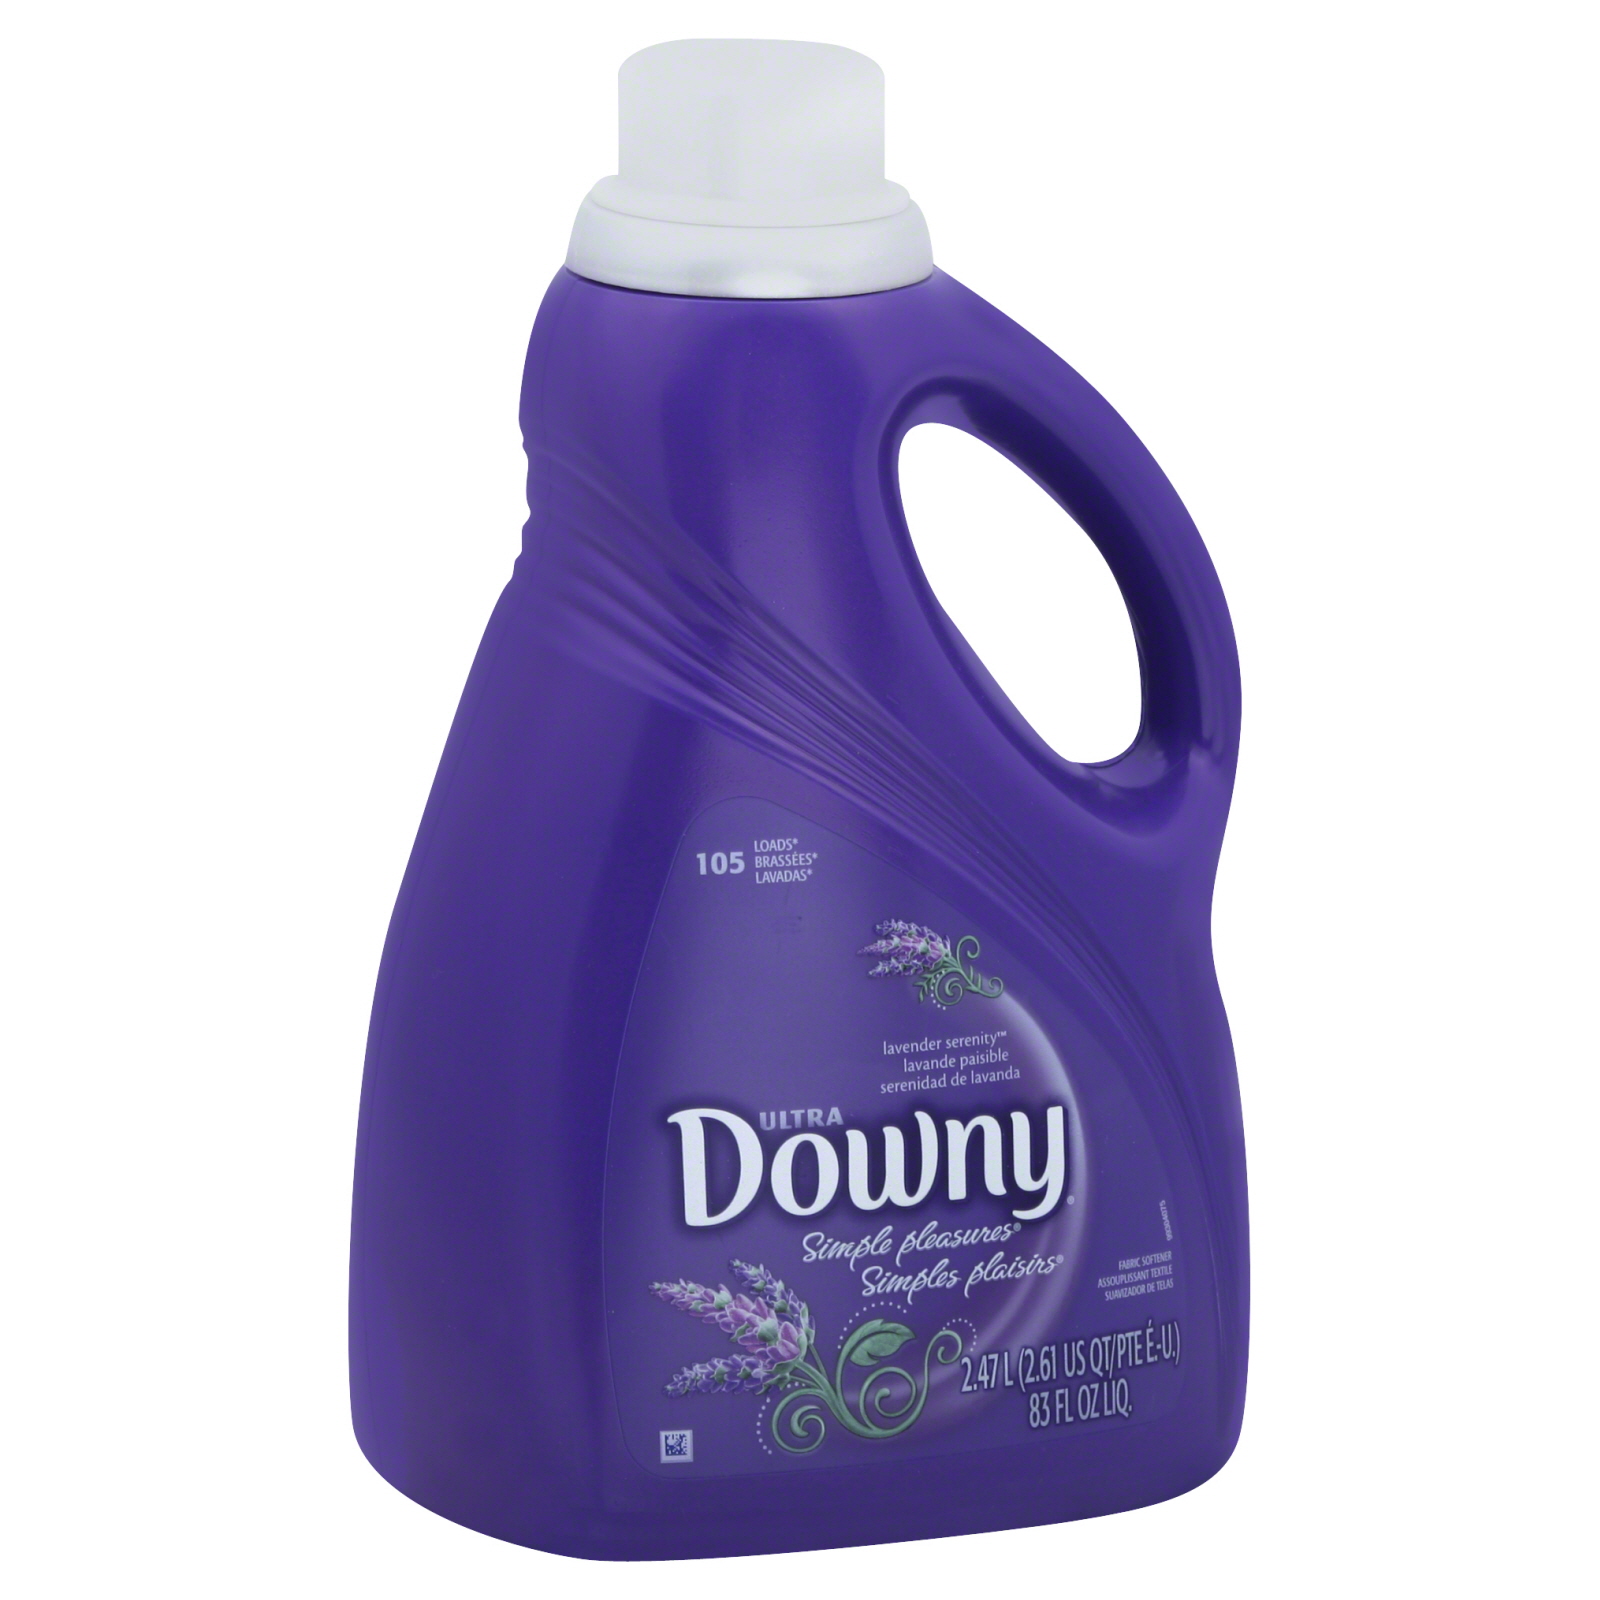 Downy Liquid Fabric Softener Simple Pleasures Lavender Serenity 83 Ounce Bottle